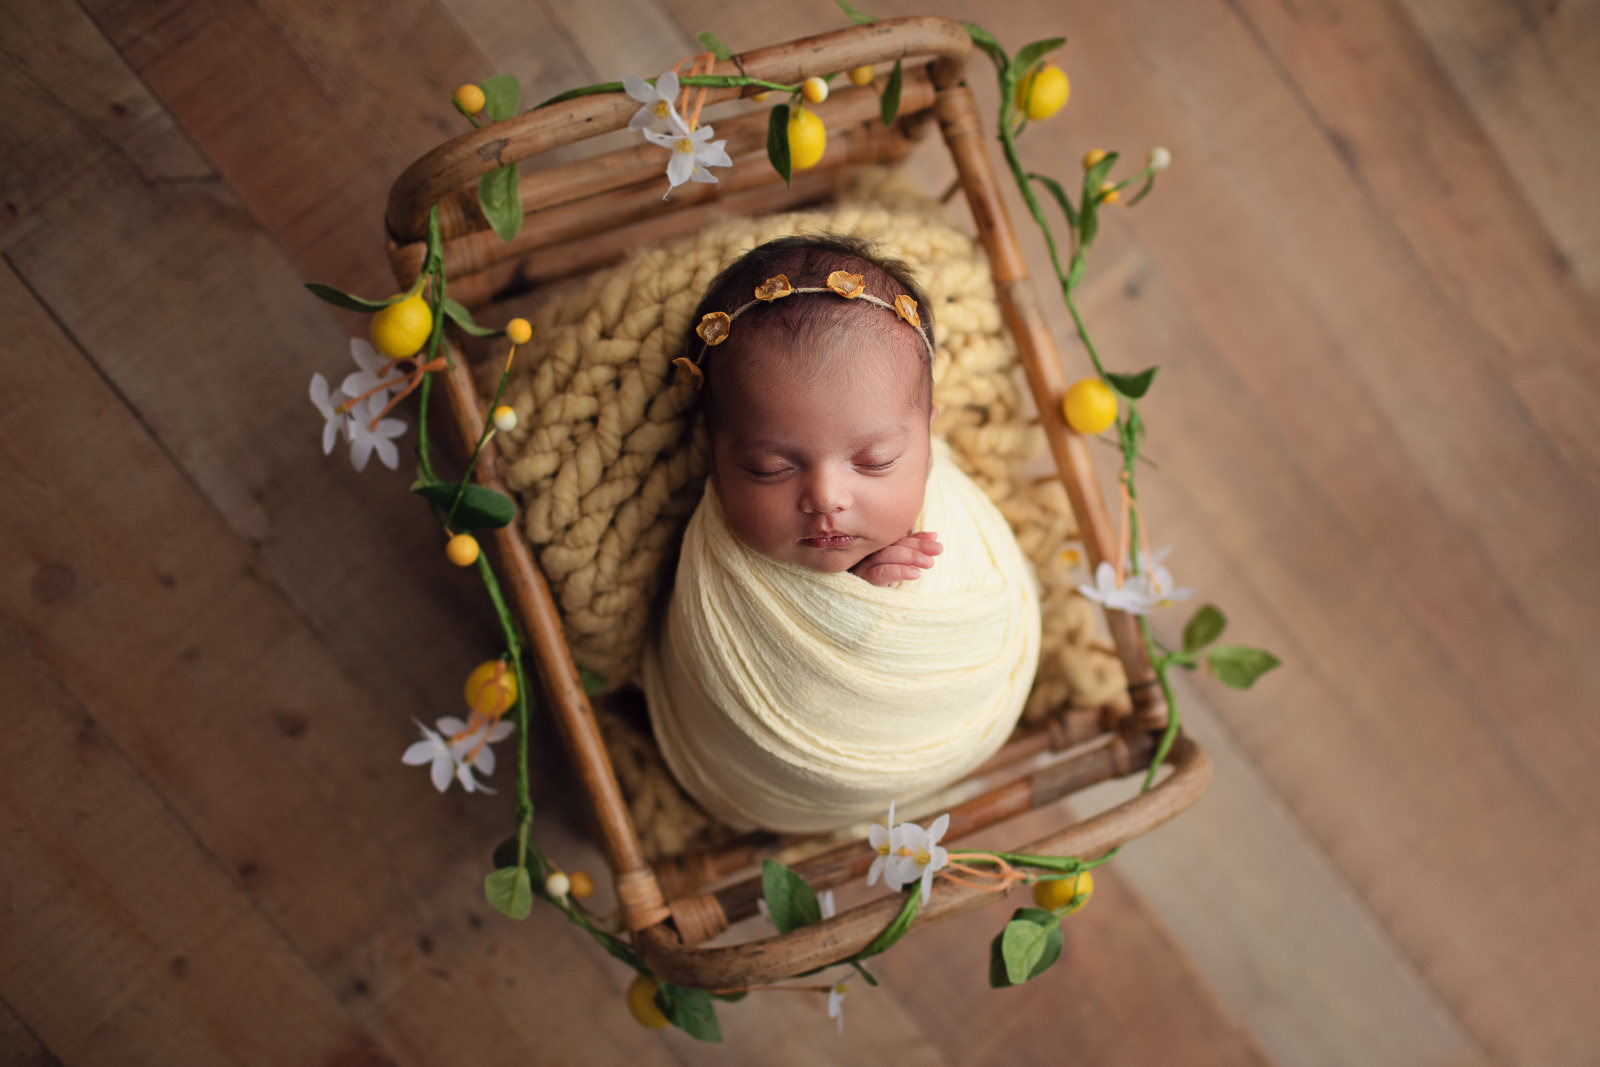 Limoo Photo - Bay Area Newborn, Maternity & Family Photographer